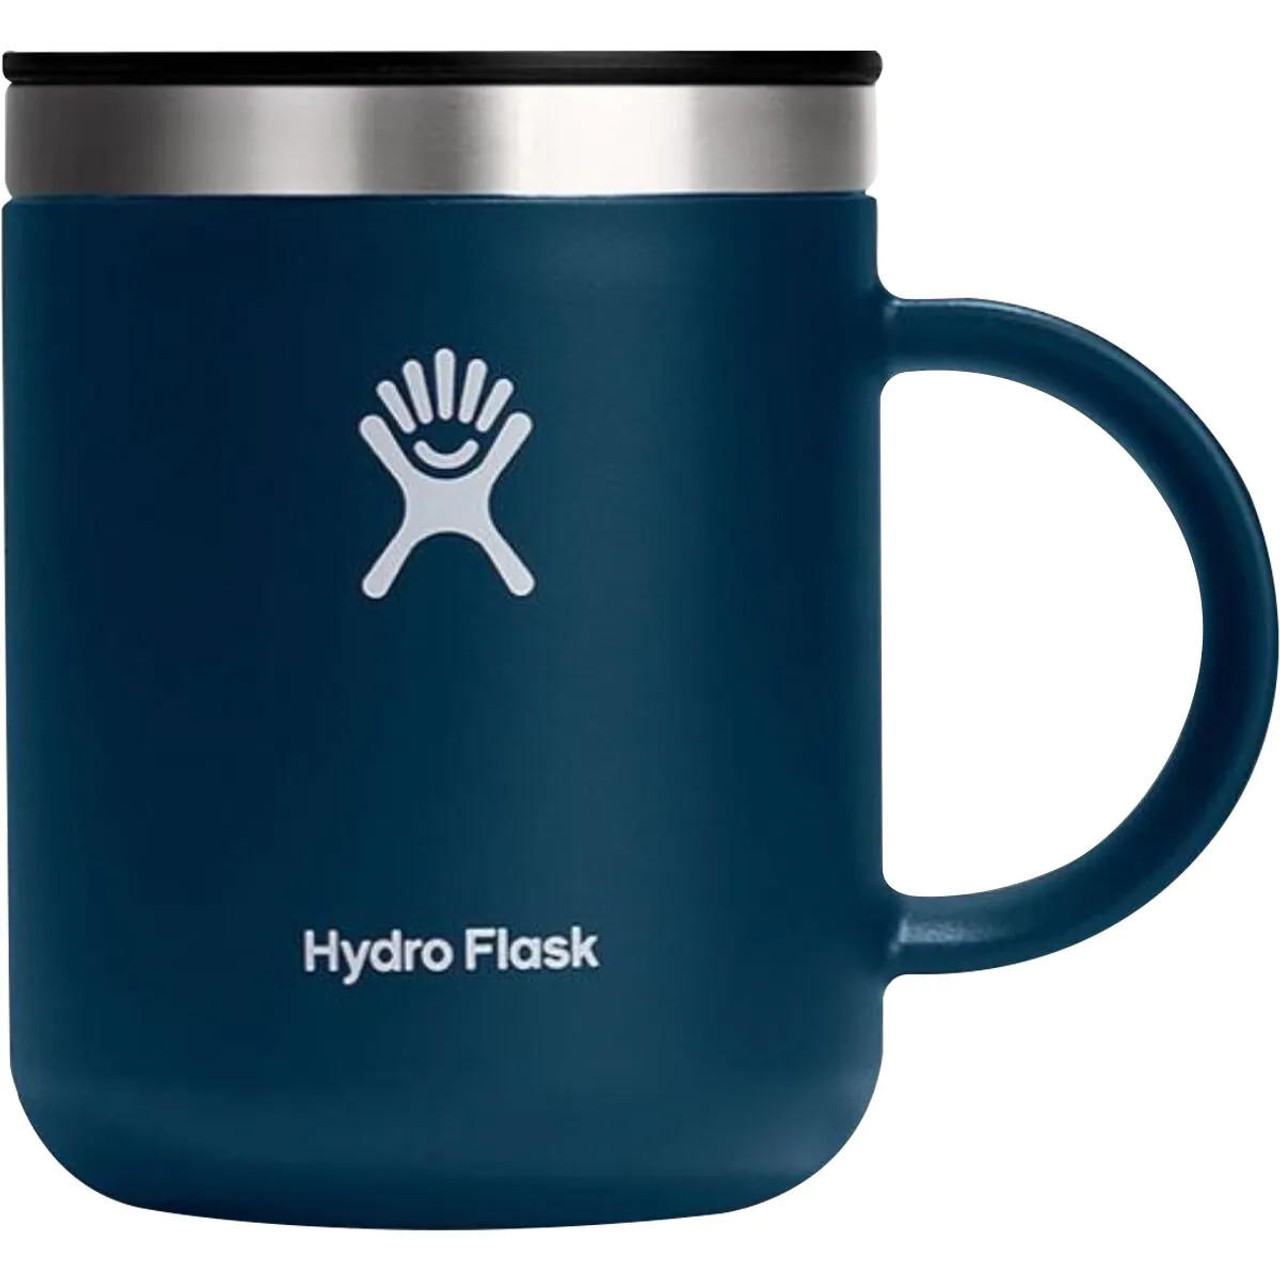 Hydro Flask 12 oz Coffee with Flex Sip Lid Stone